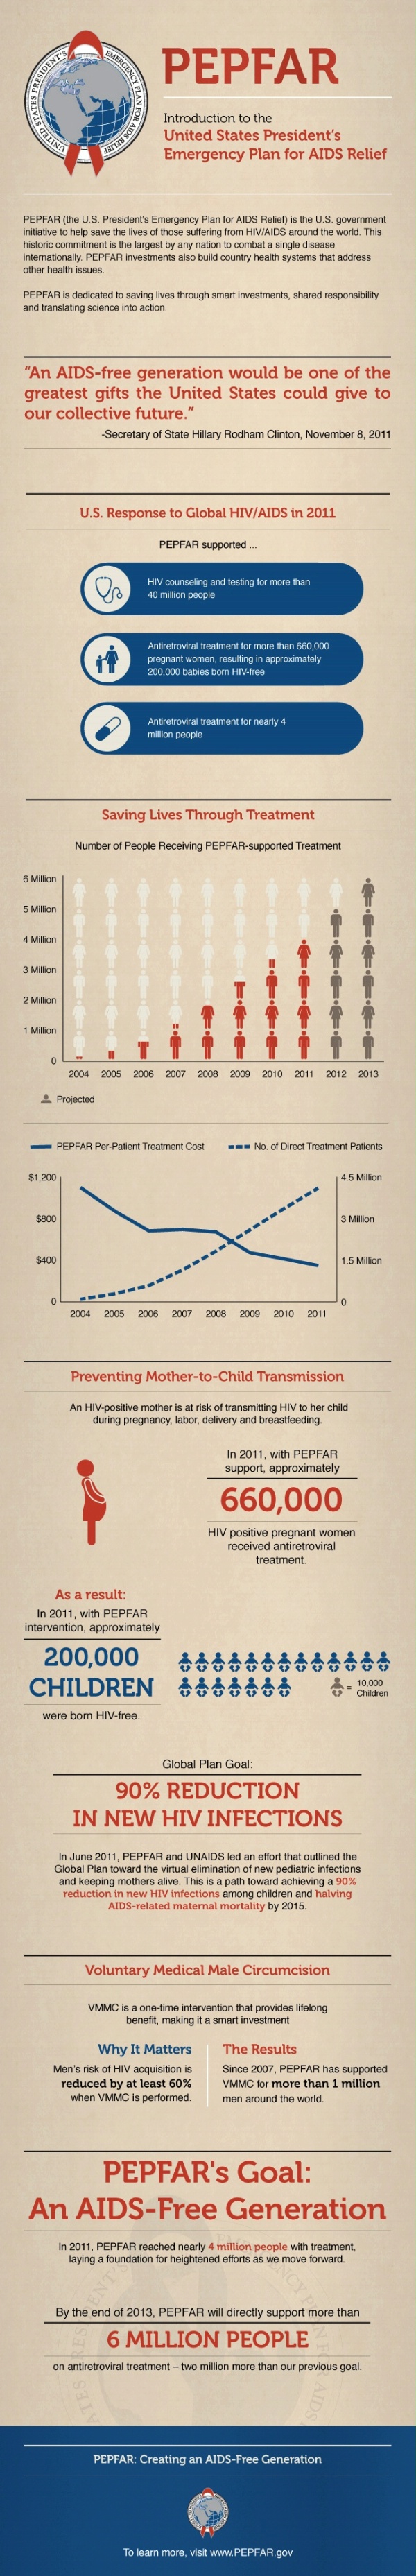 Date: 07/23/2012 Description: PEPFAR Saving Lives Infographic © PEPFAR